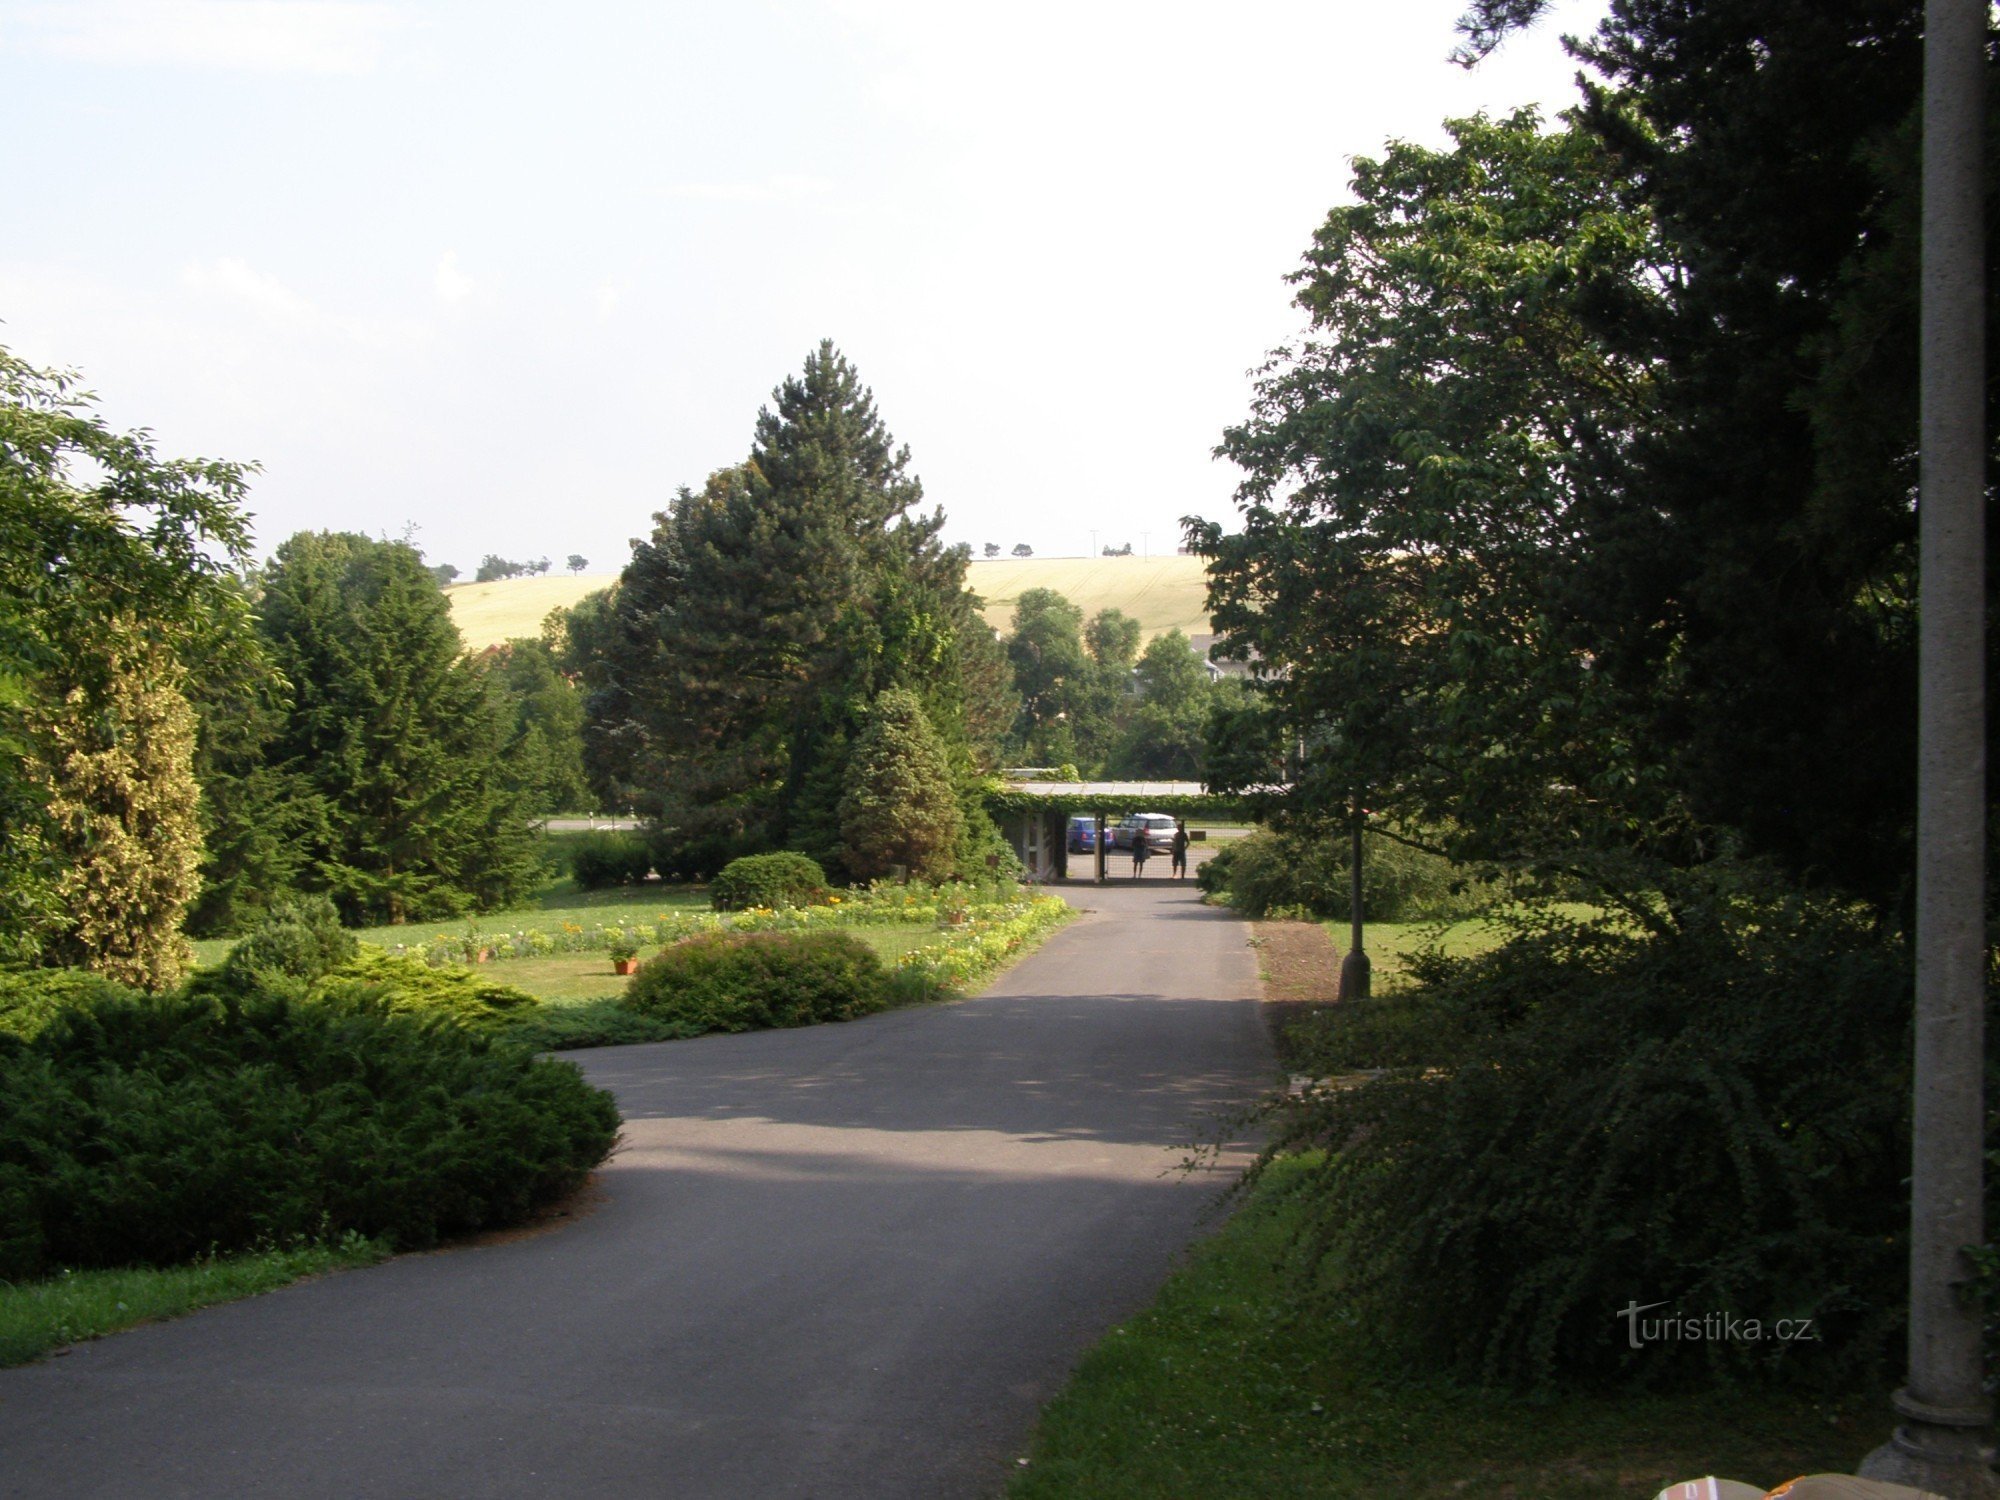 Arboretum Nový Dvůr bij Opava